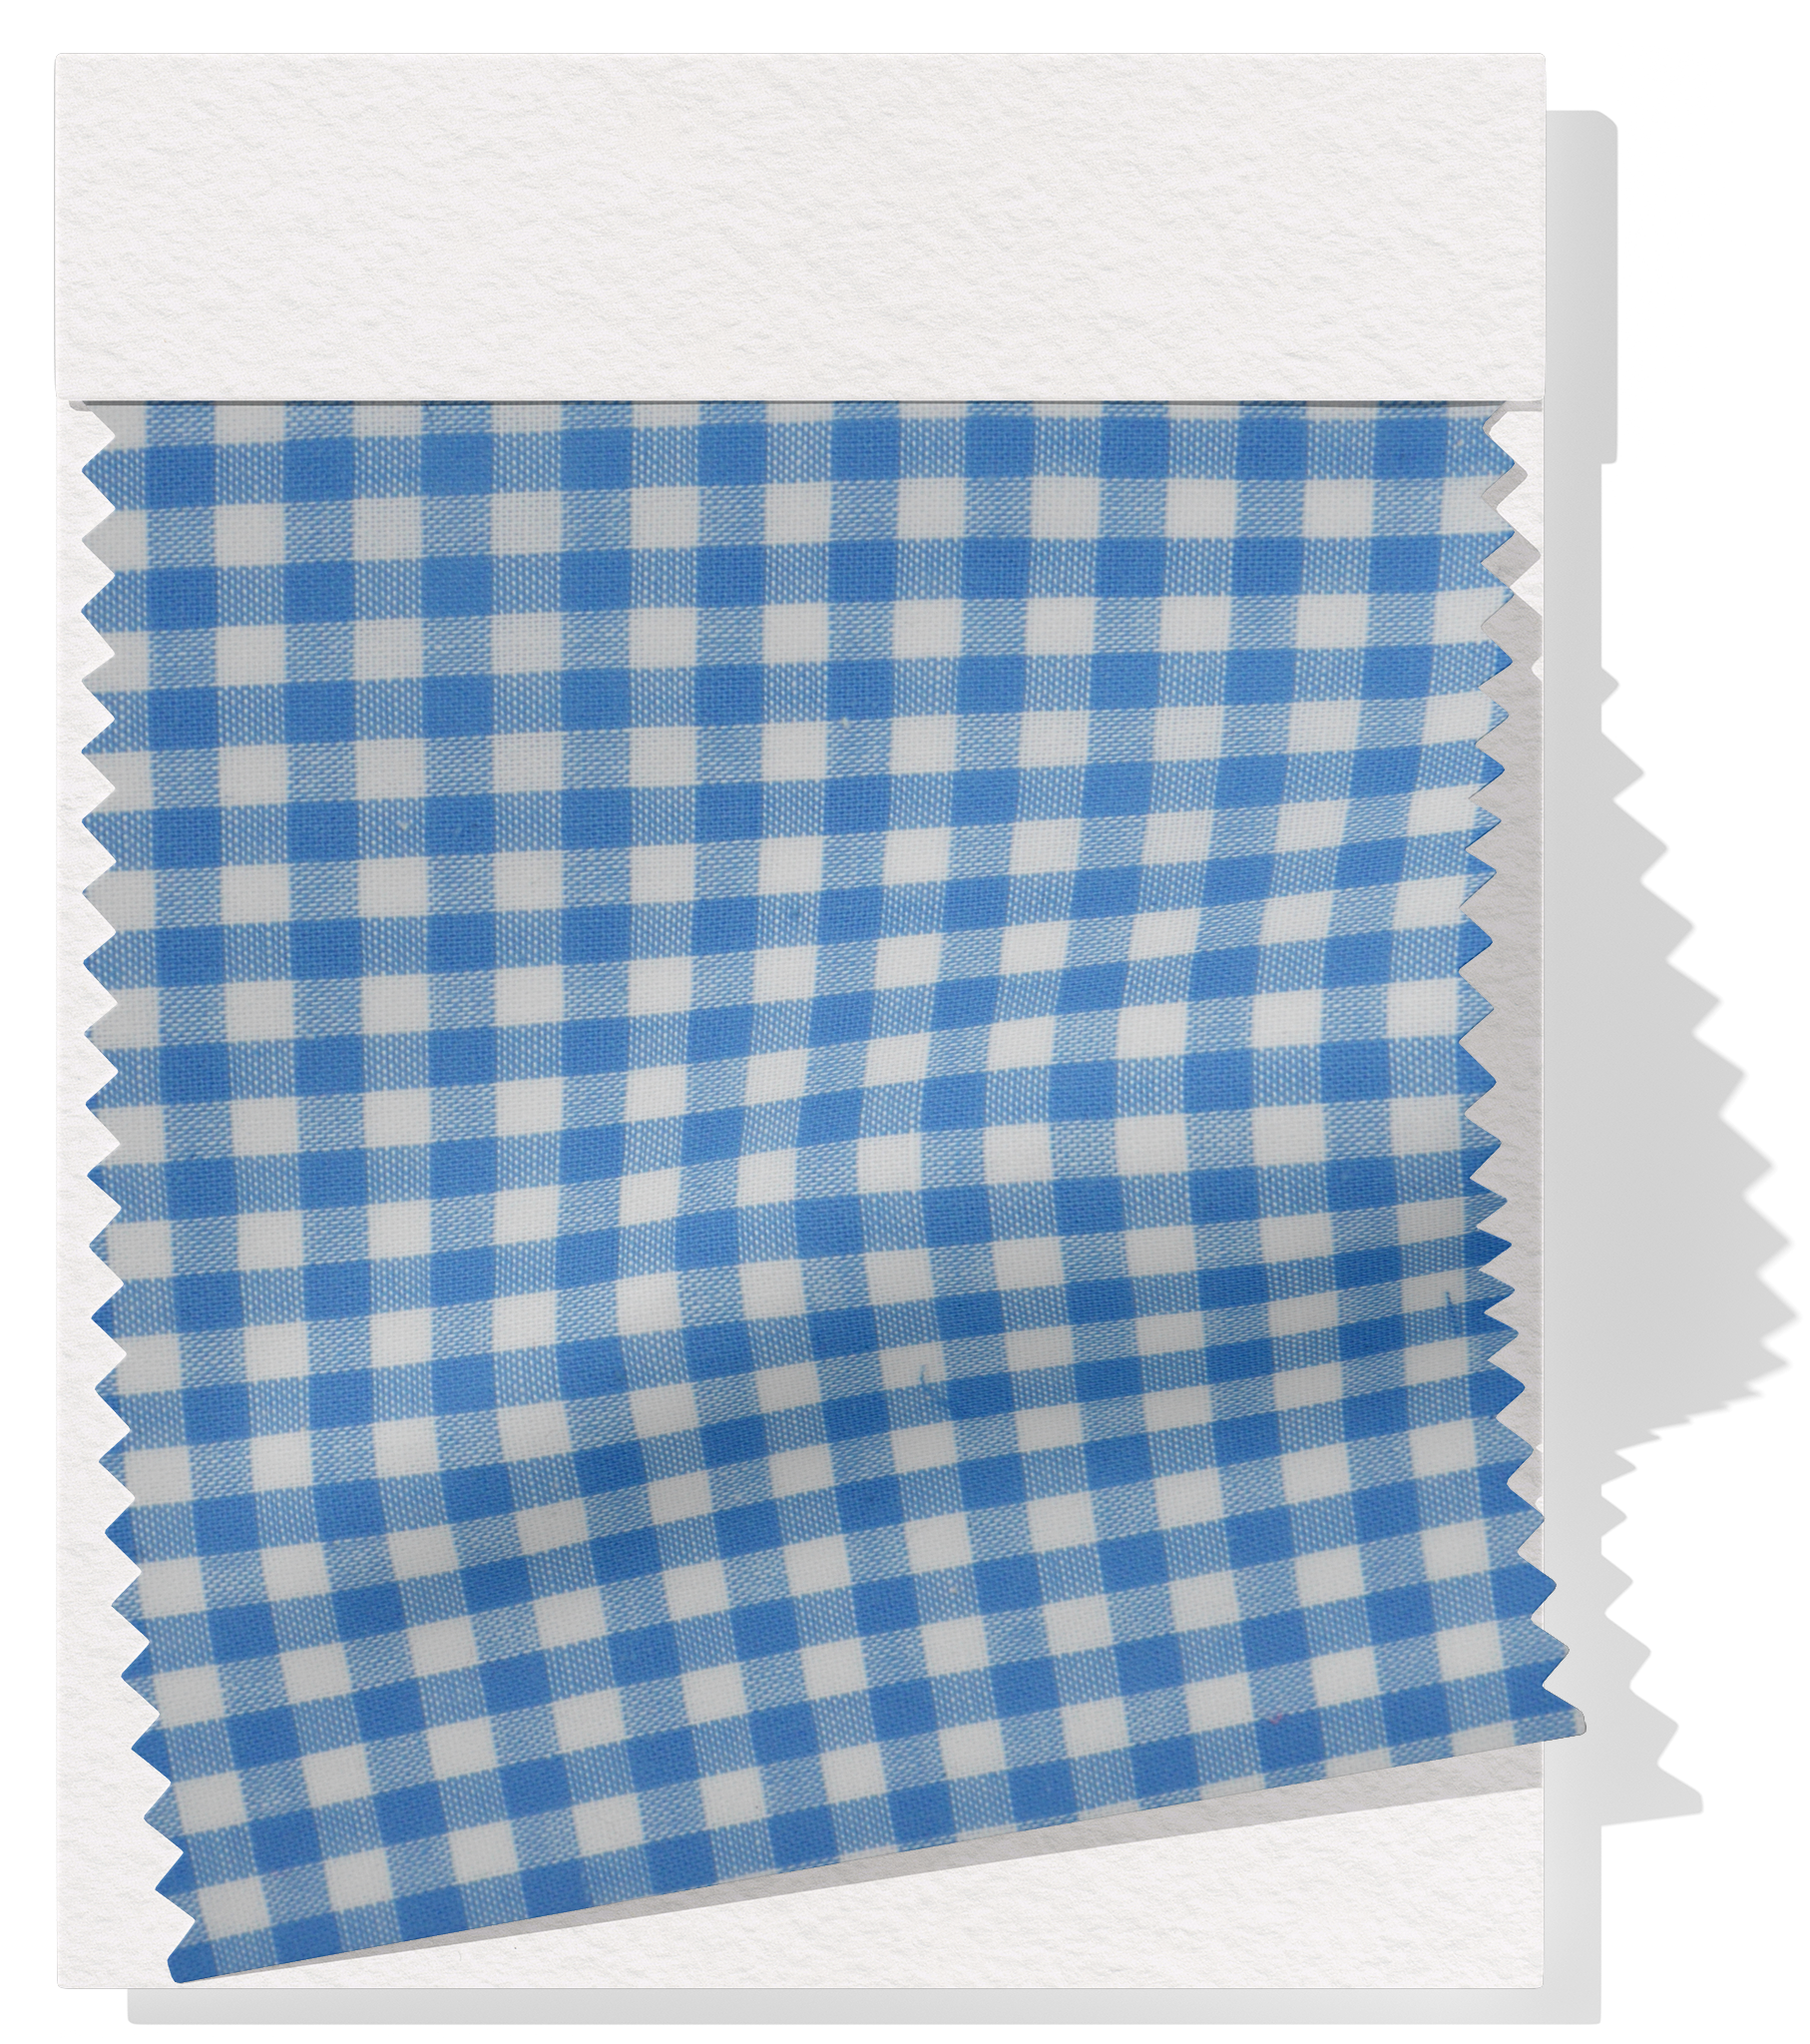 Cotton Gingham Print $14.00p/m - Blue & White (Small)